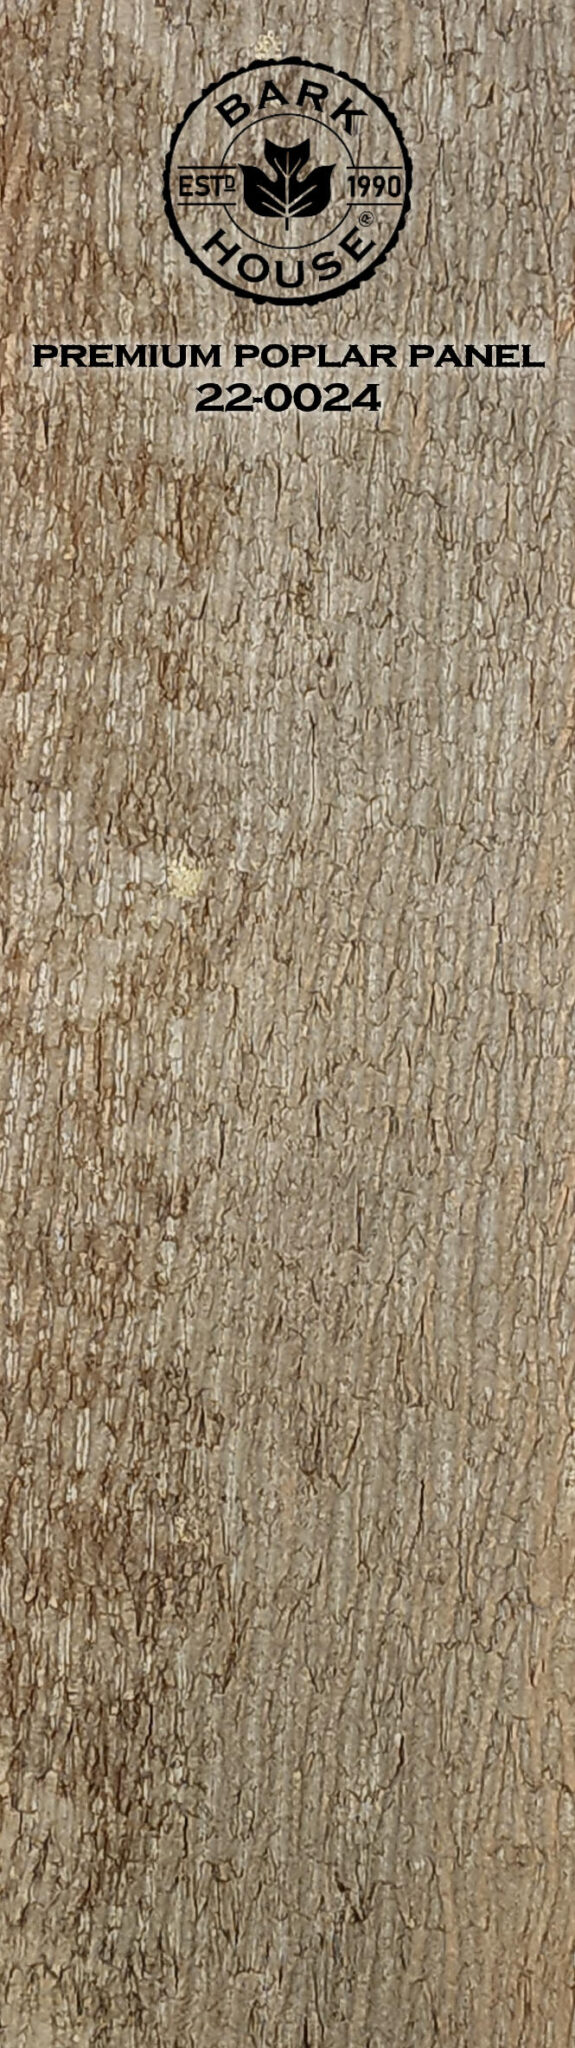 Bark House poplar bark panel SKU POPP-PRE-22-0024